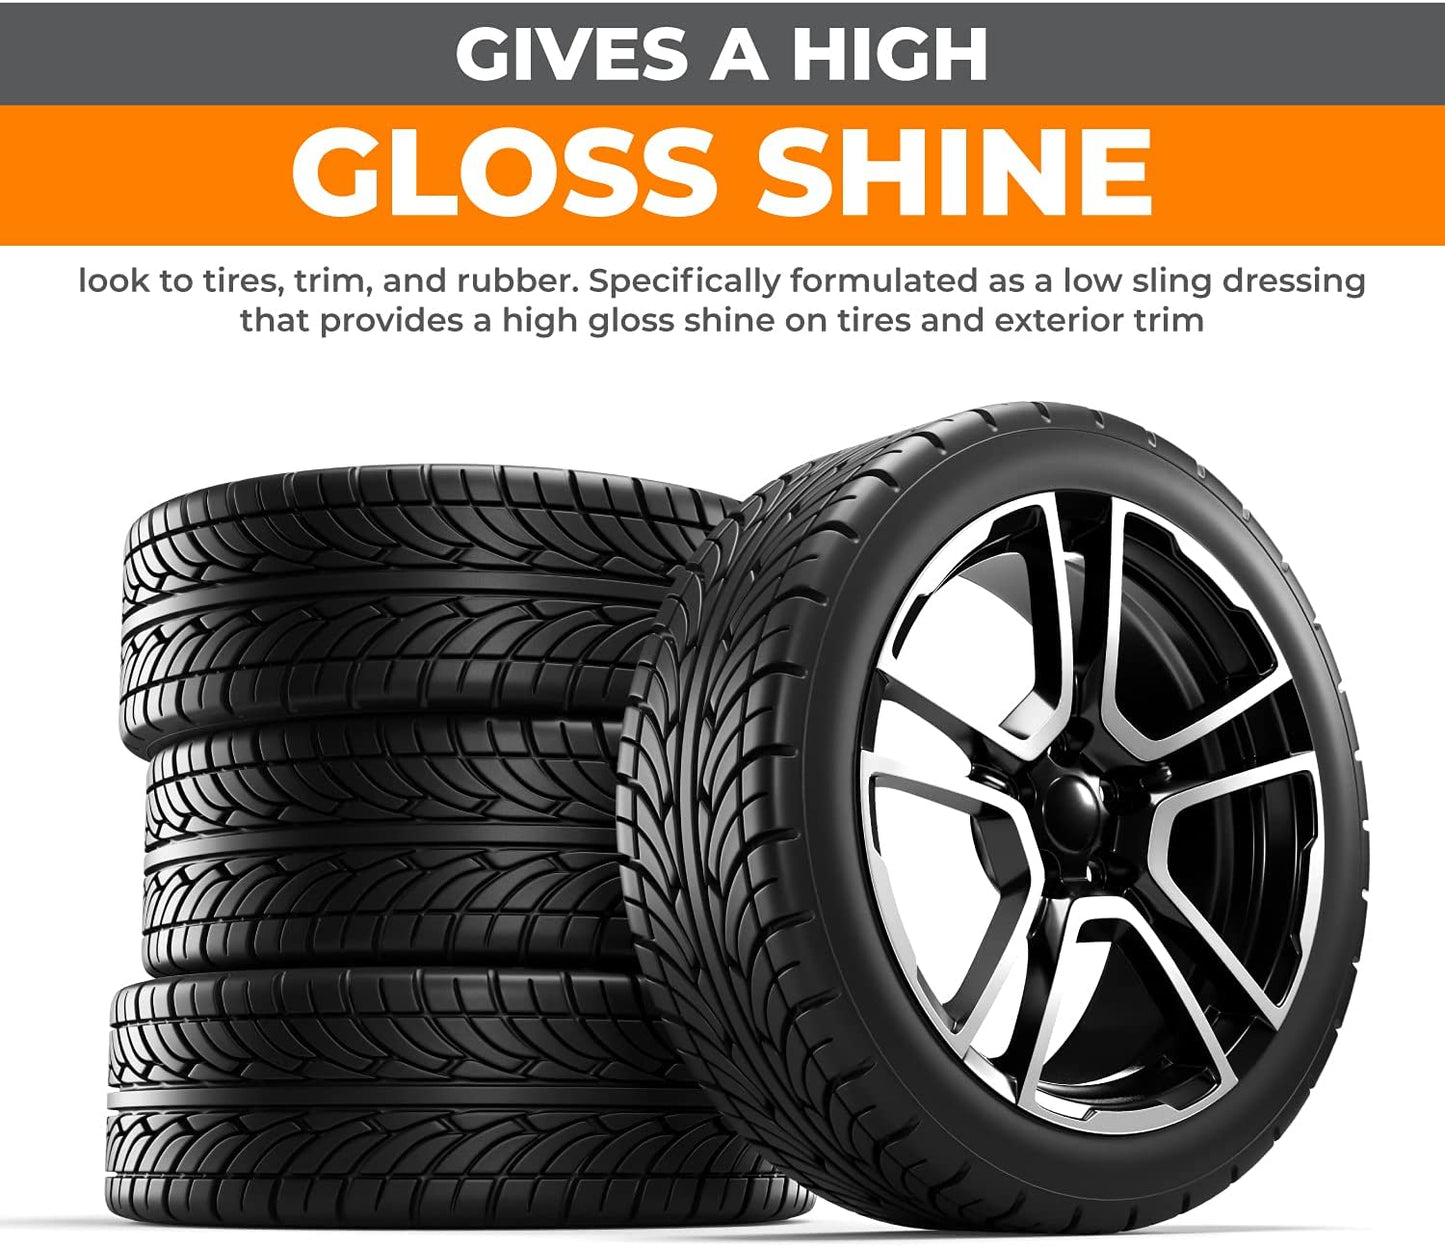 Tire Dress Up - High Gloss Shine Tire Dressing